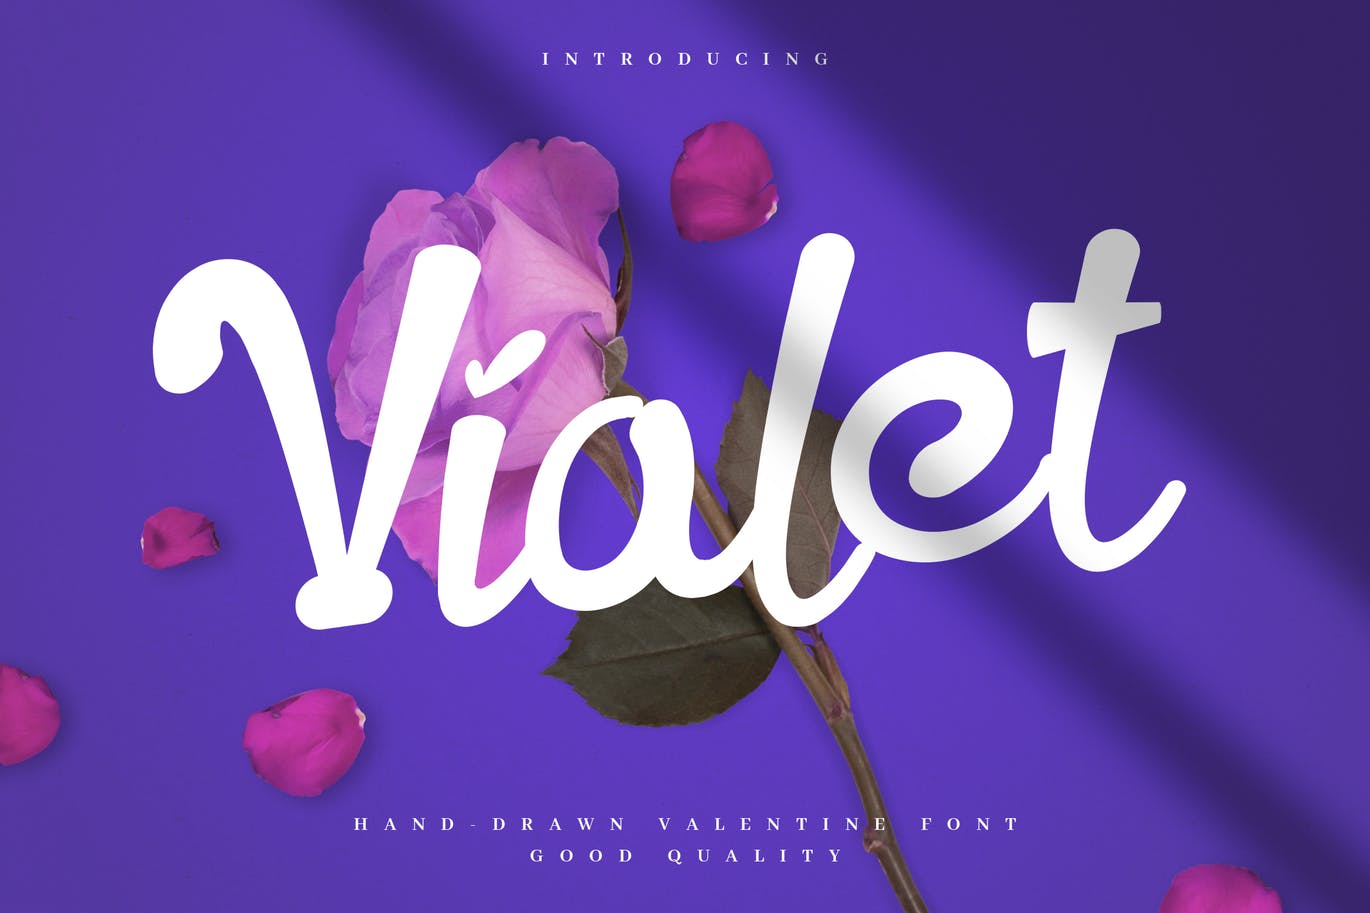 Violet valentine